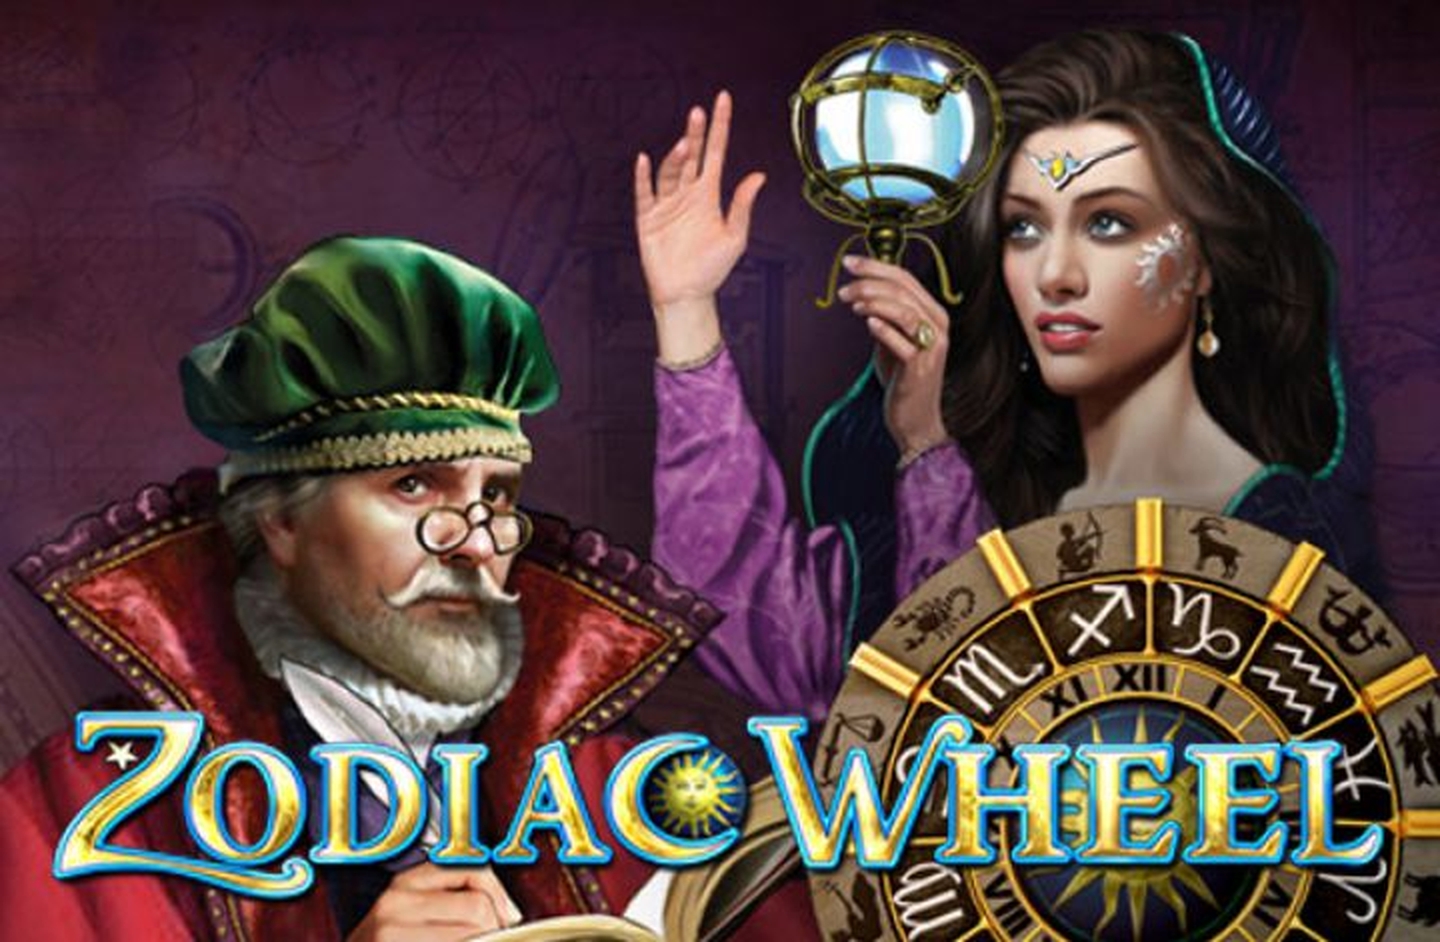 Zodiac Wheel demo